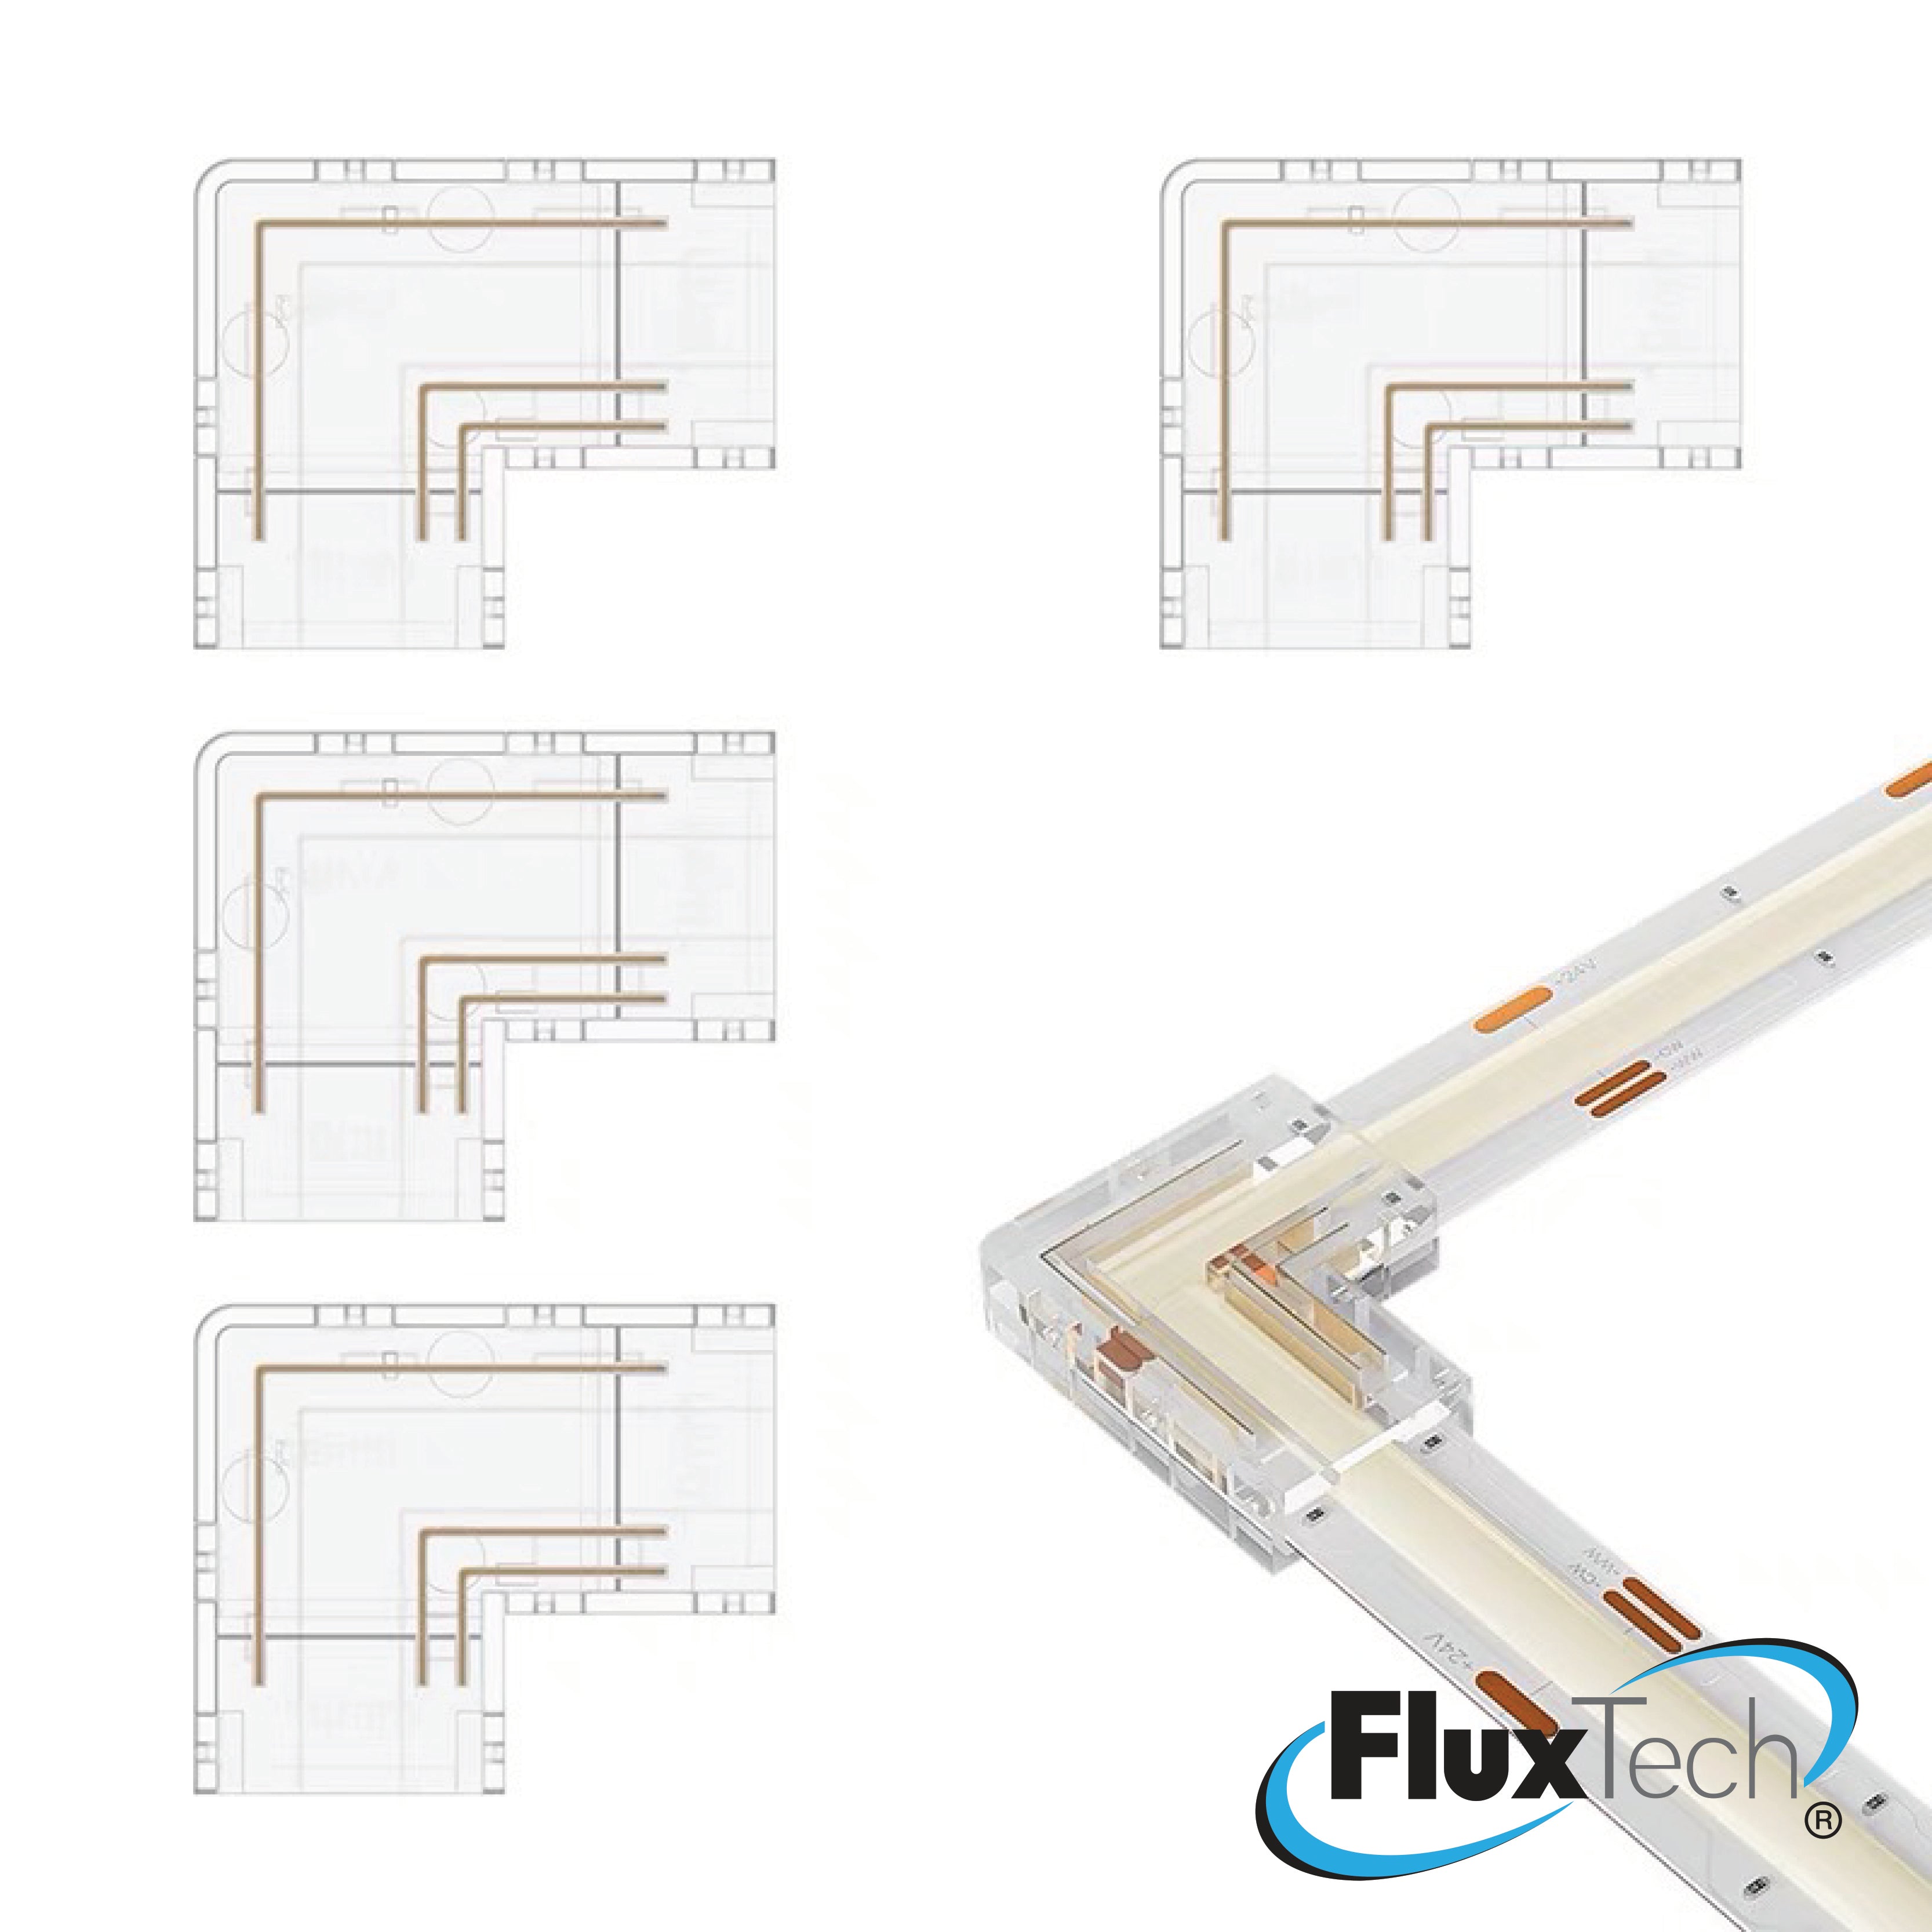 FluxTech - L Shape Re-useable Gapless Solderless COB LED 2 Pin / 3 Pin / 4 Pin 10mm Strip Connectors